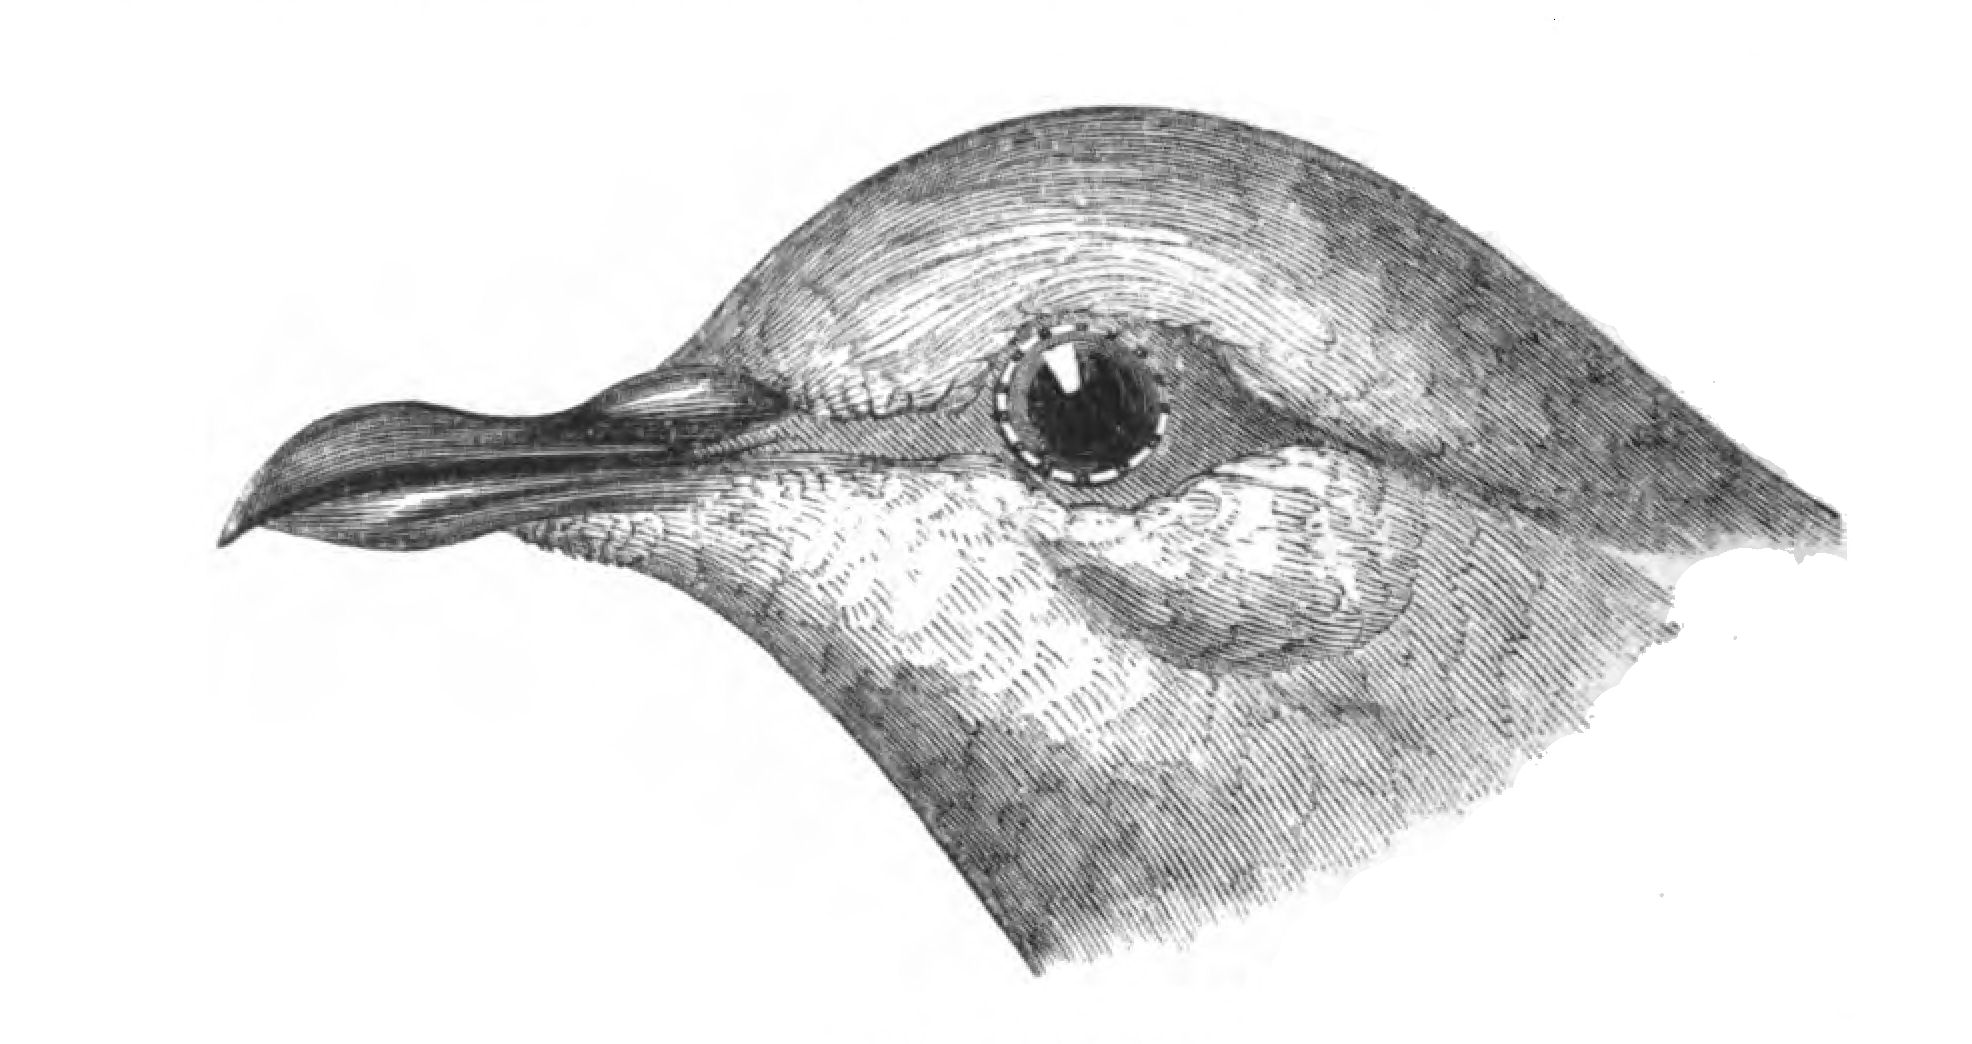 File:Natural History, Birds - Pigeon head.jpg - Wikimedia Commons